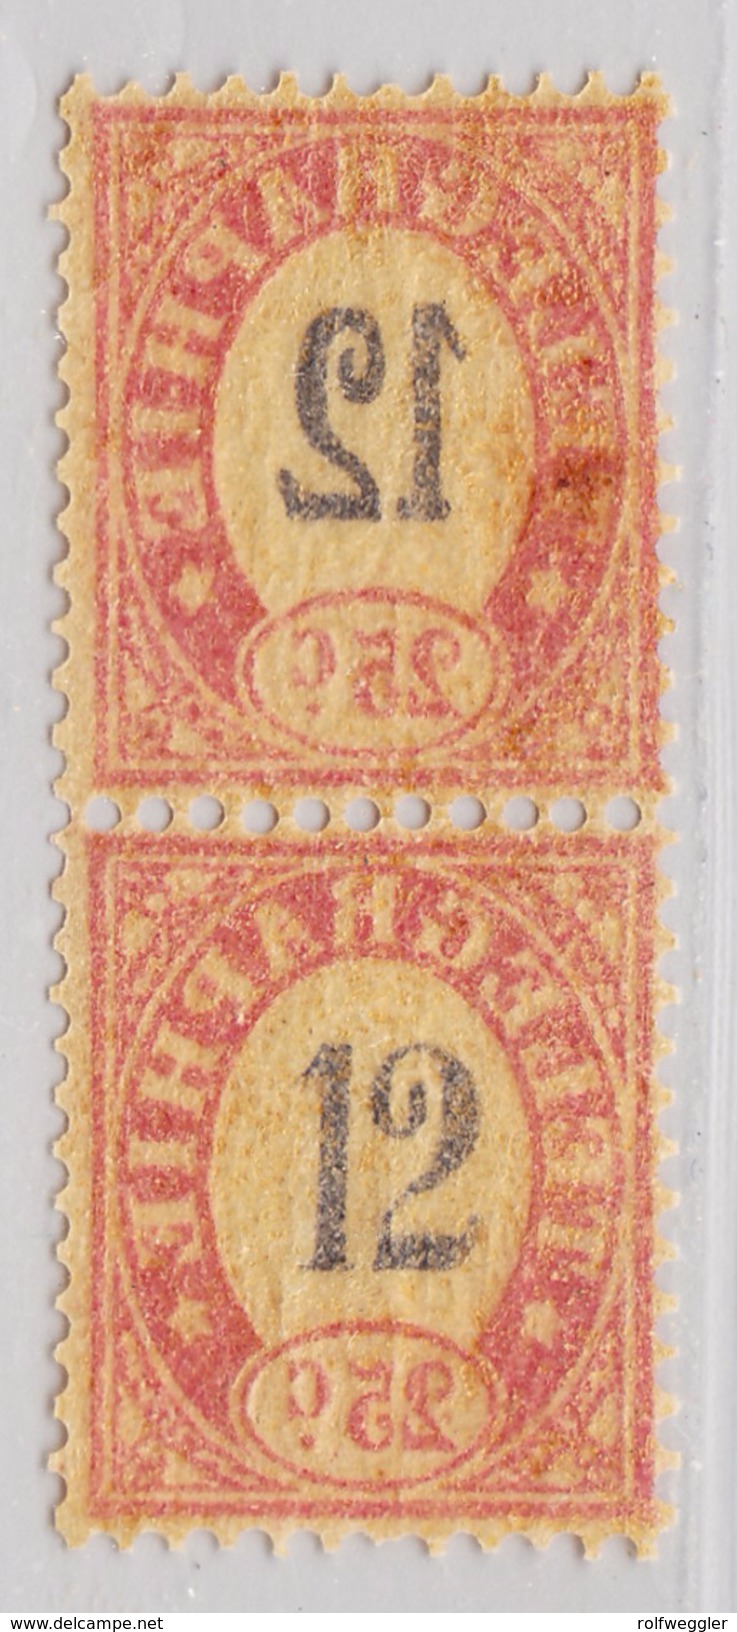 Schweiz Telegraphen-Marke 1868 Probedruck 25c Senkrechtes Paar Auf Seidenpapier - Télégraphe